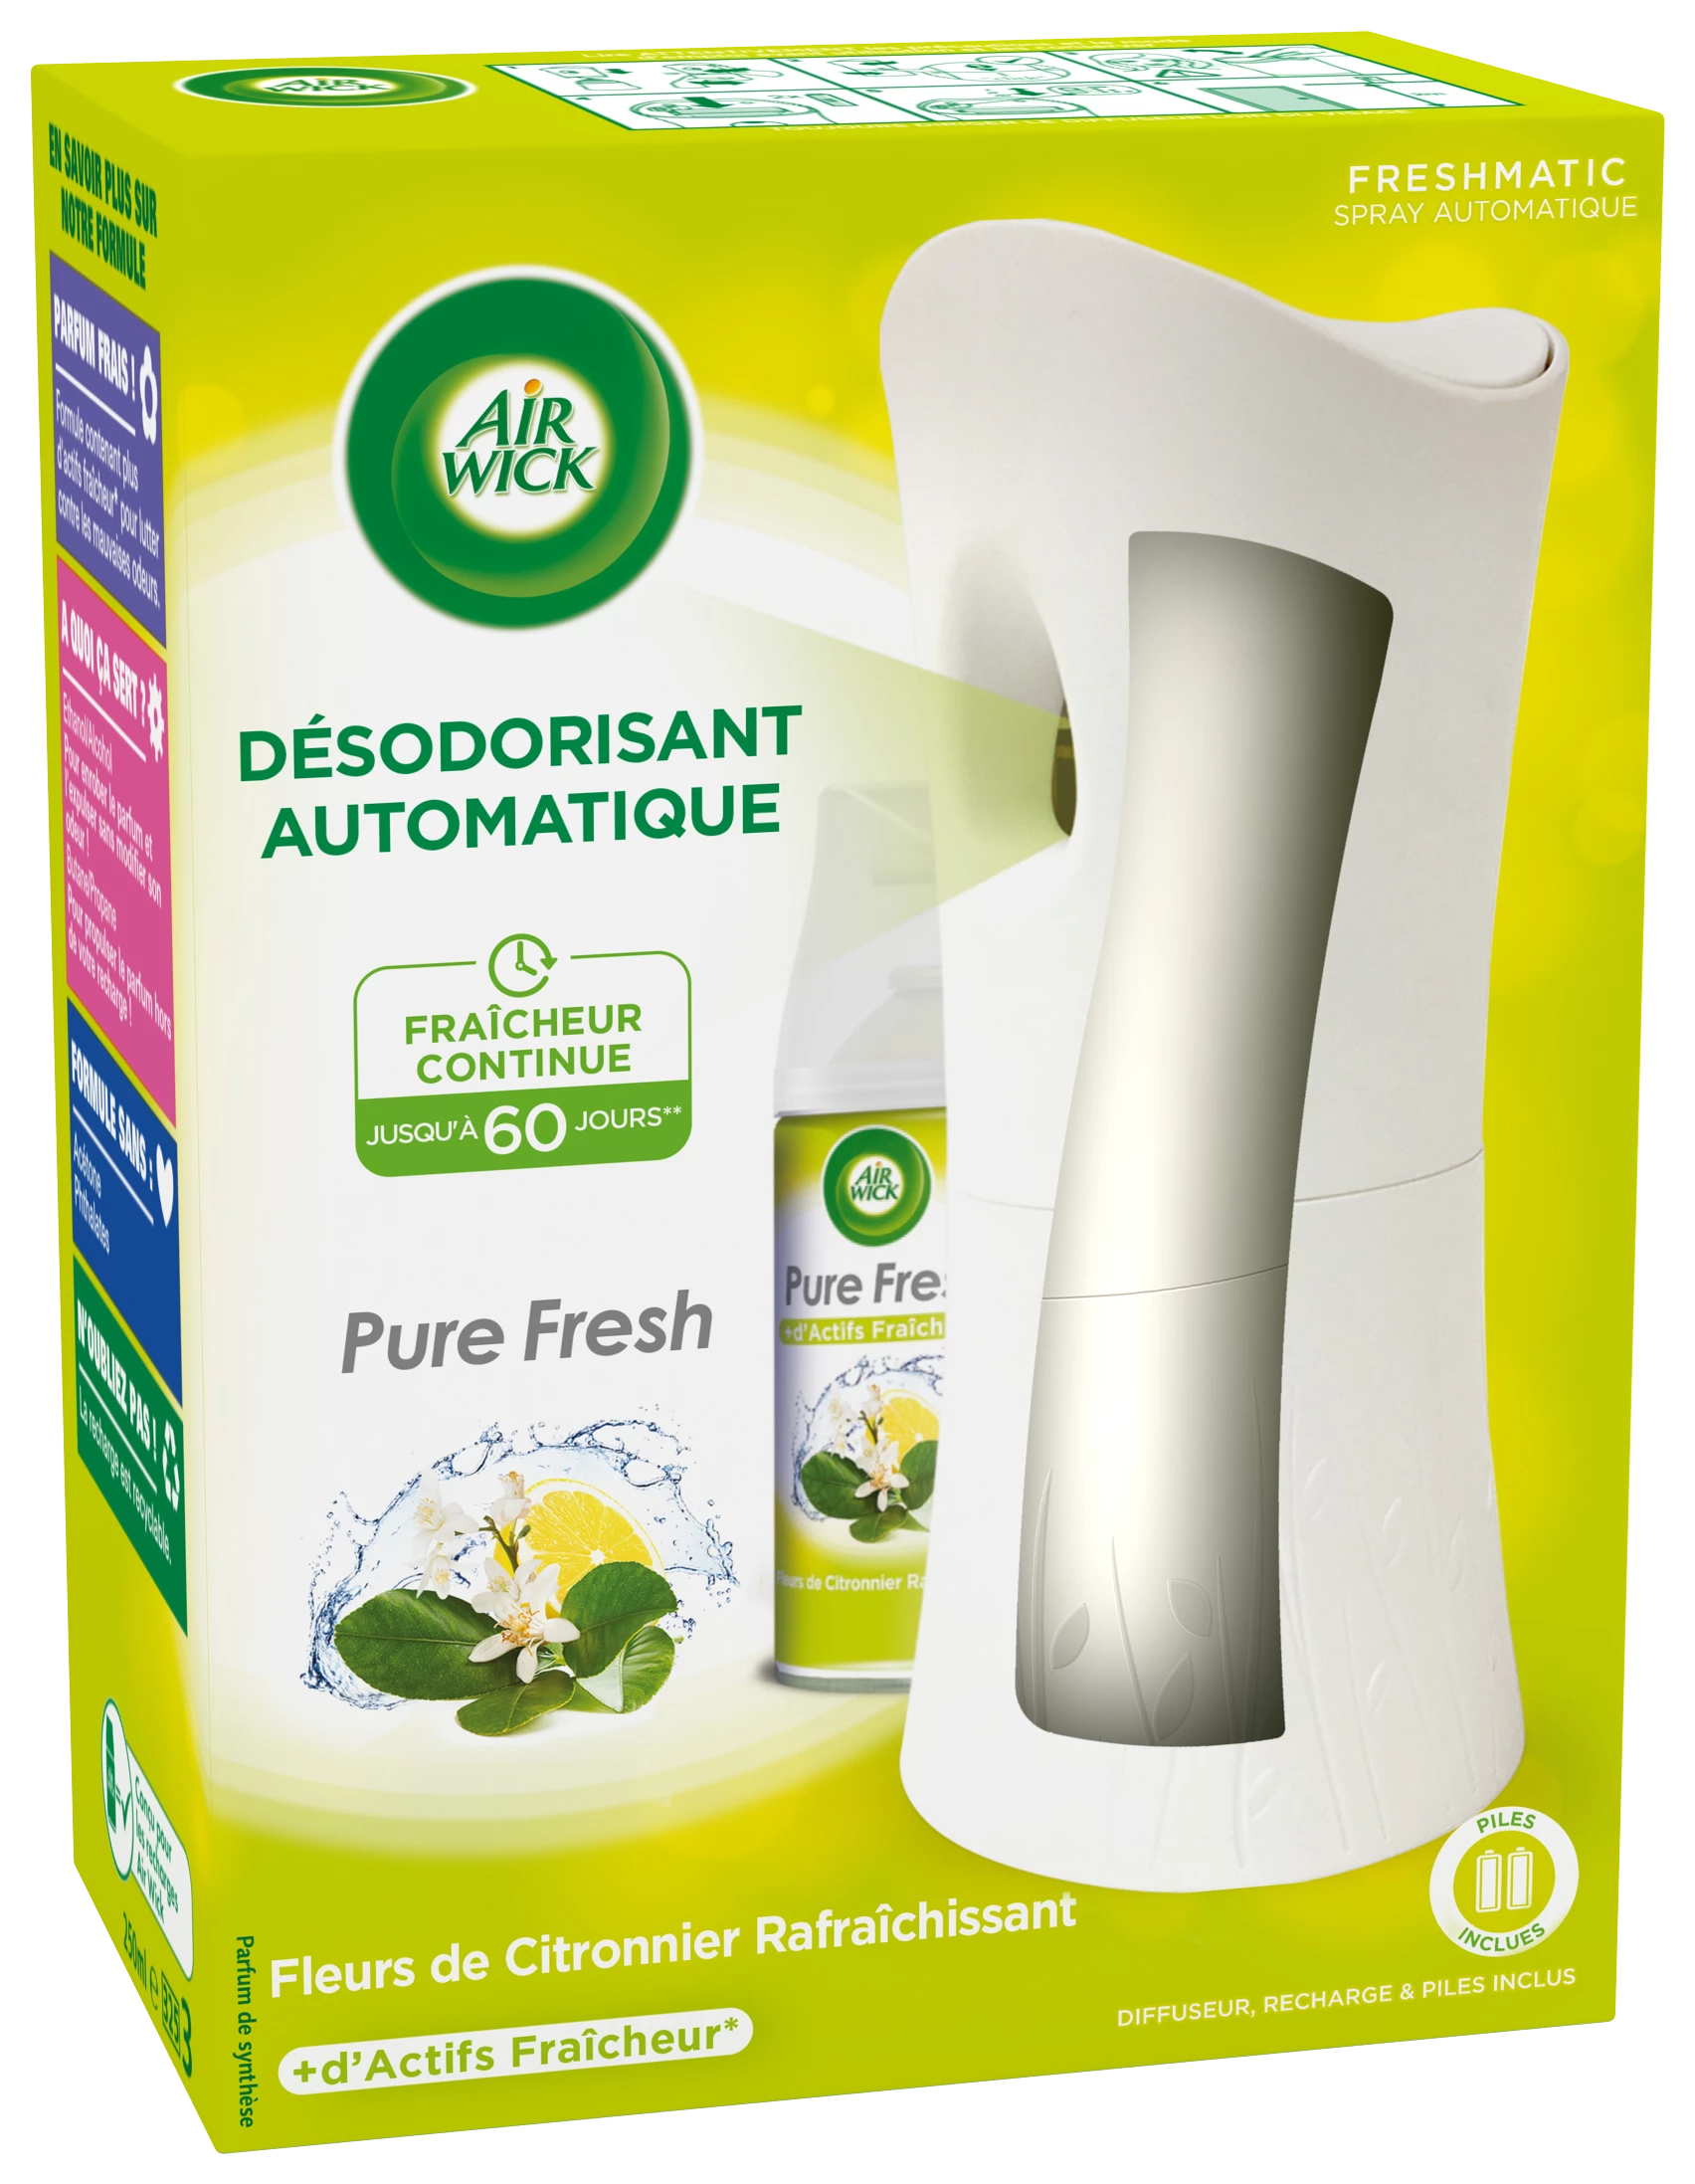 Deodorante per ambienti Freshmatic Pure Lemon - AIR WICK